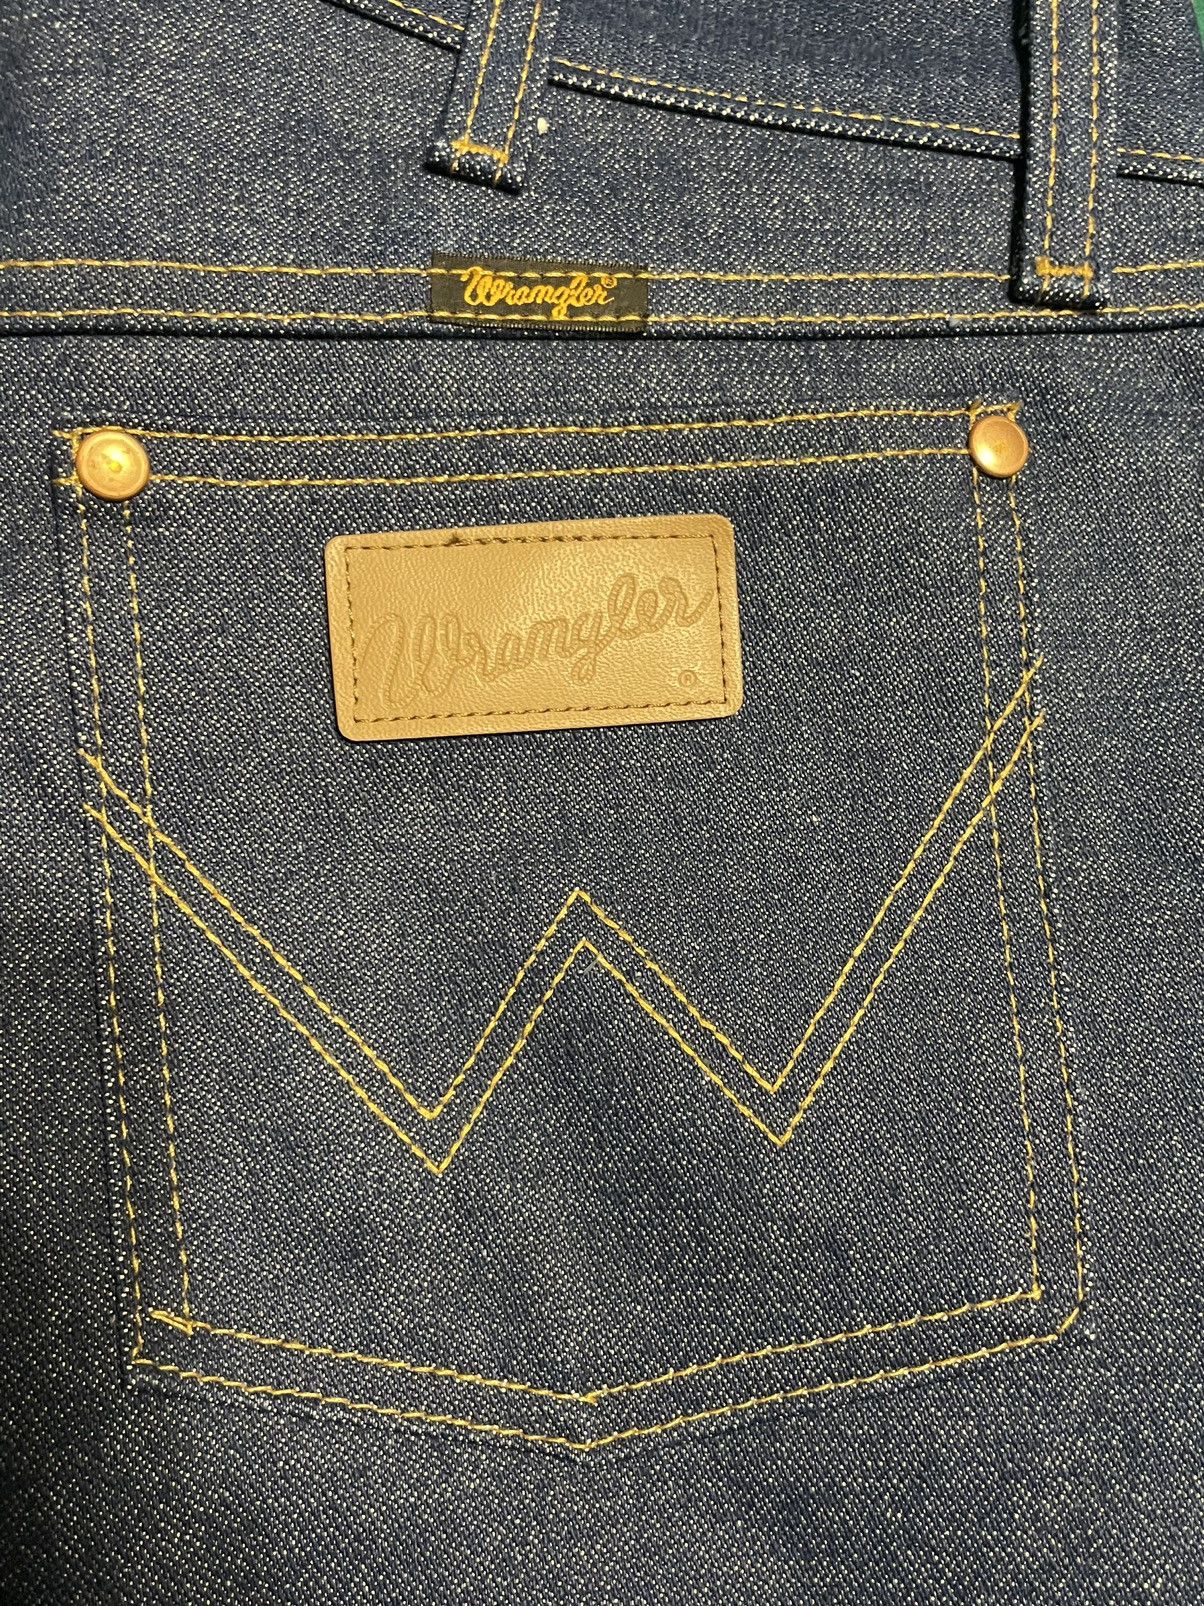 Vintage Wrangler Jeans Size US 34 / EU 50 - 2 Preview